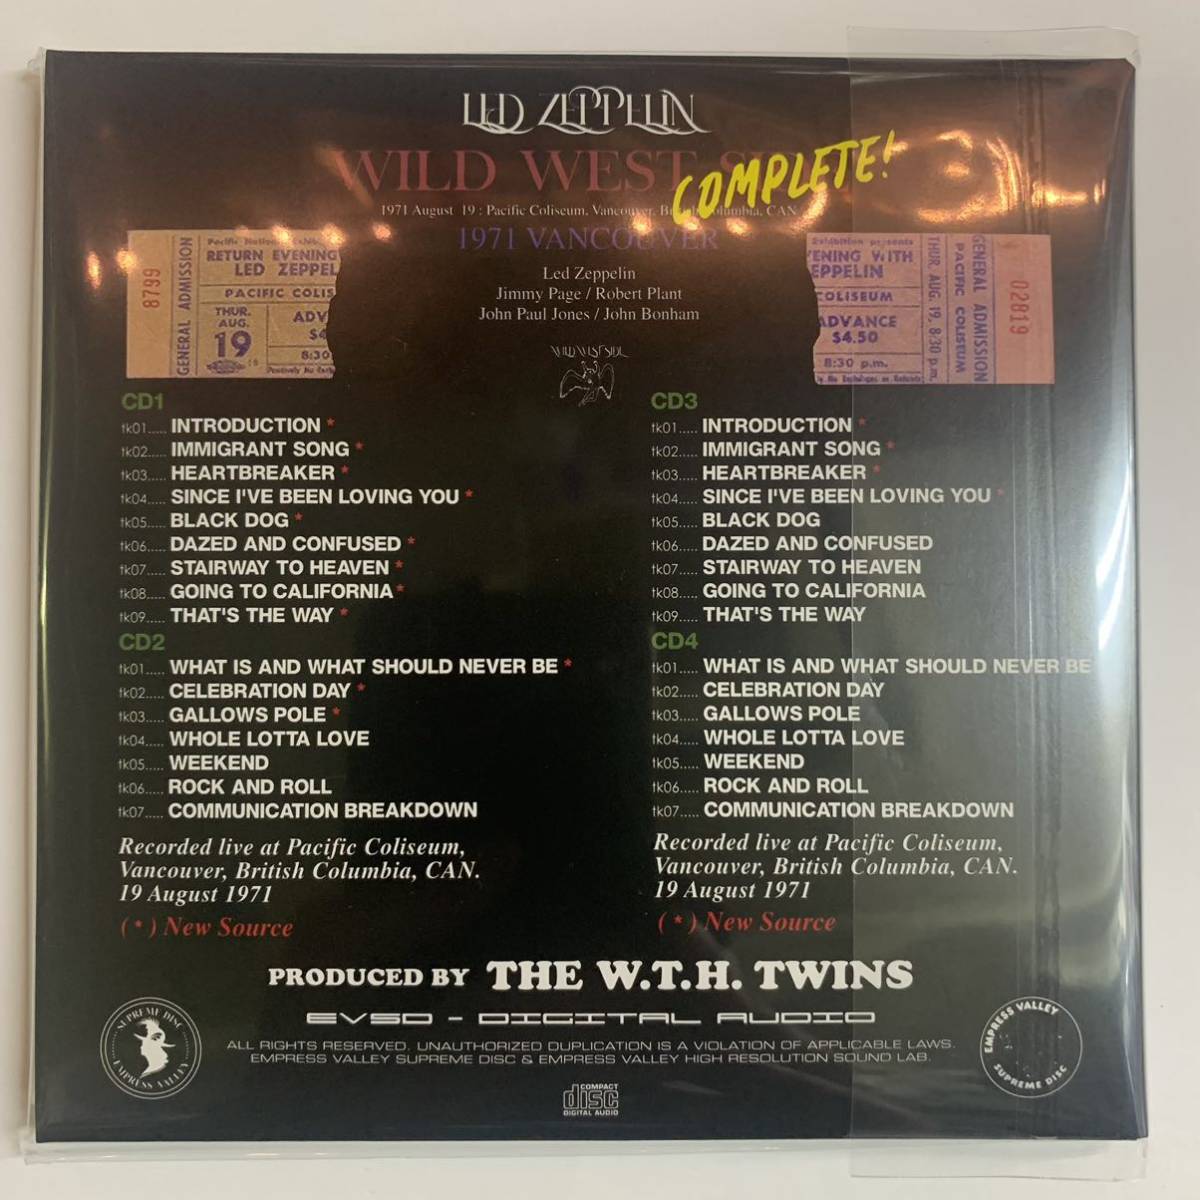 LED ZEPPELIN / WILD WEST SIDE “Complete!”1971 Vancouver 4CD Limited Edition Empress Valley Supreme disk 世界初登場音源！完全！_画像2